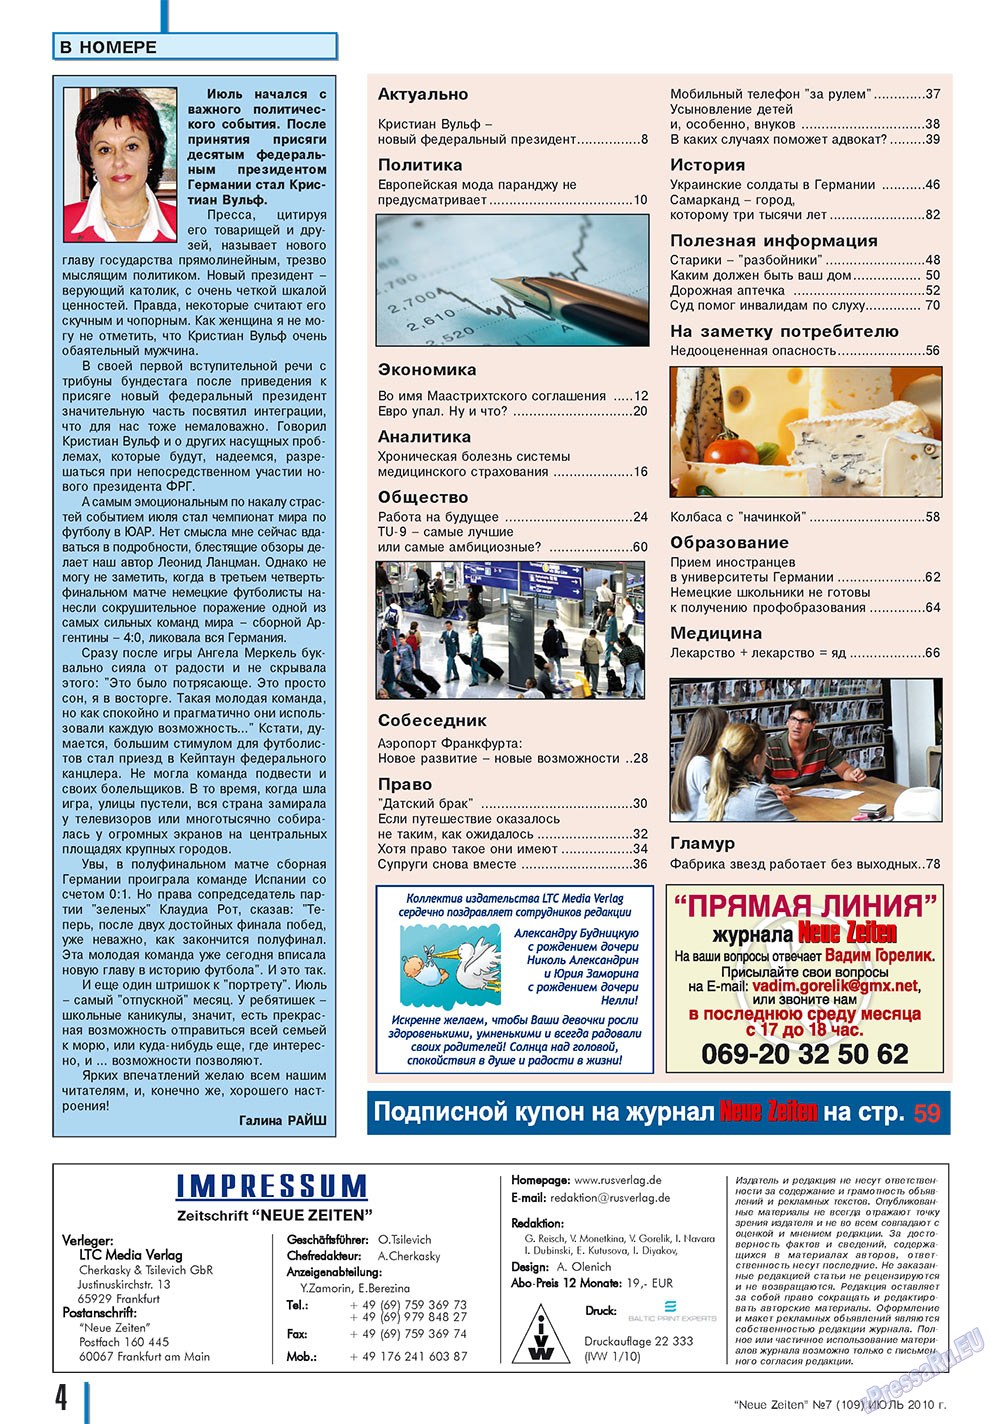 Neue Zeiten (журнал). 2010 год, номер 7, стр. 4